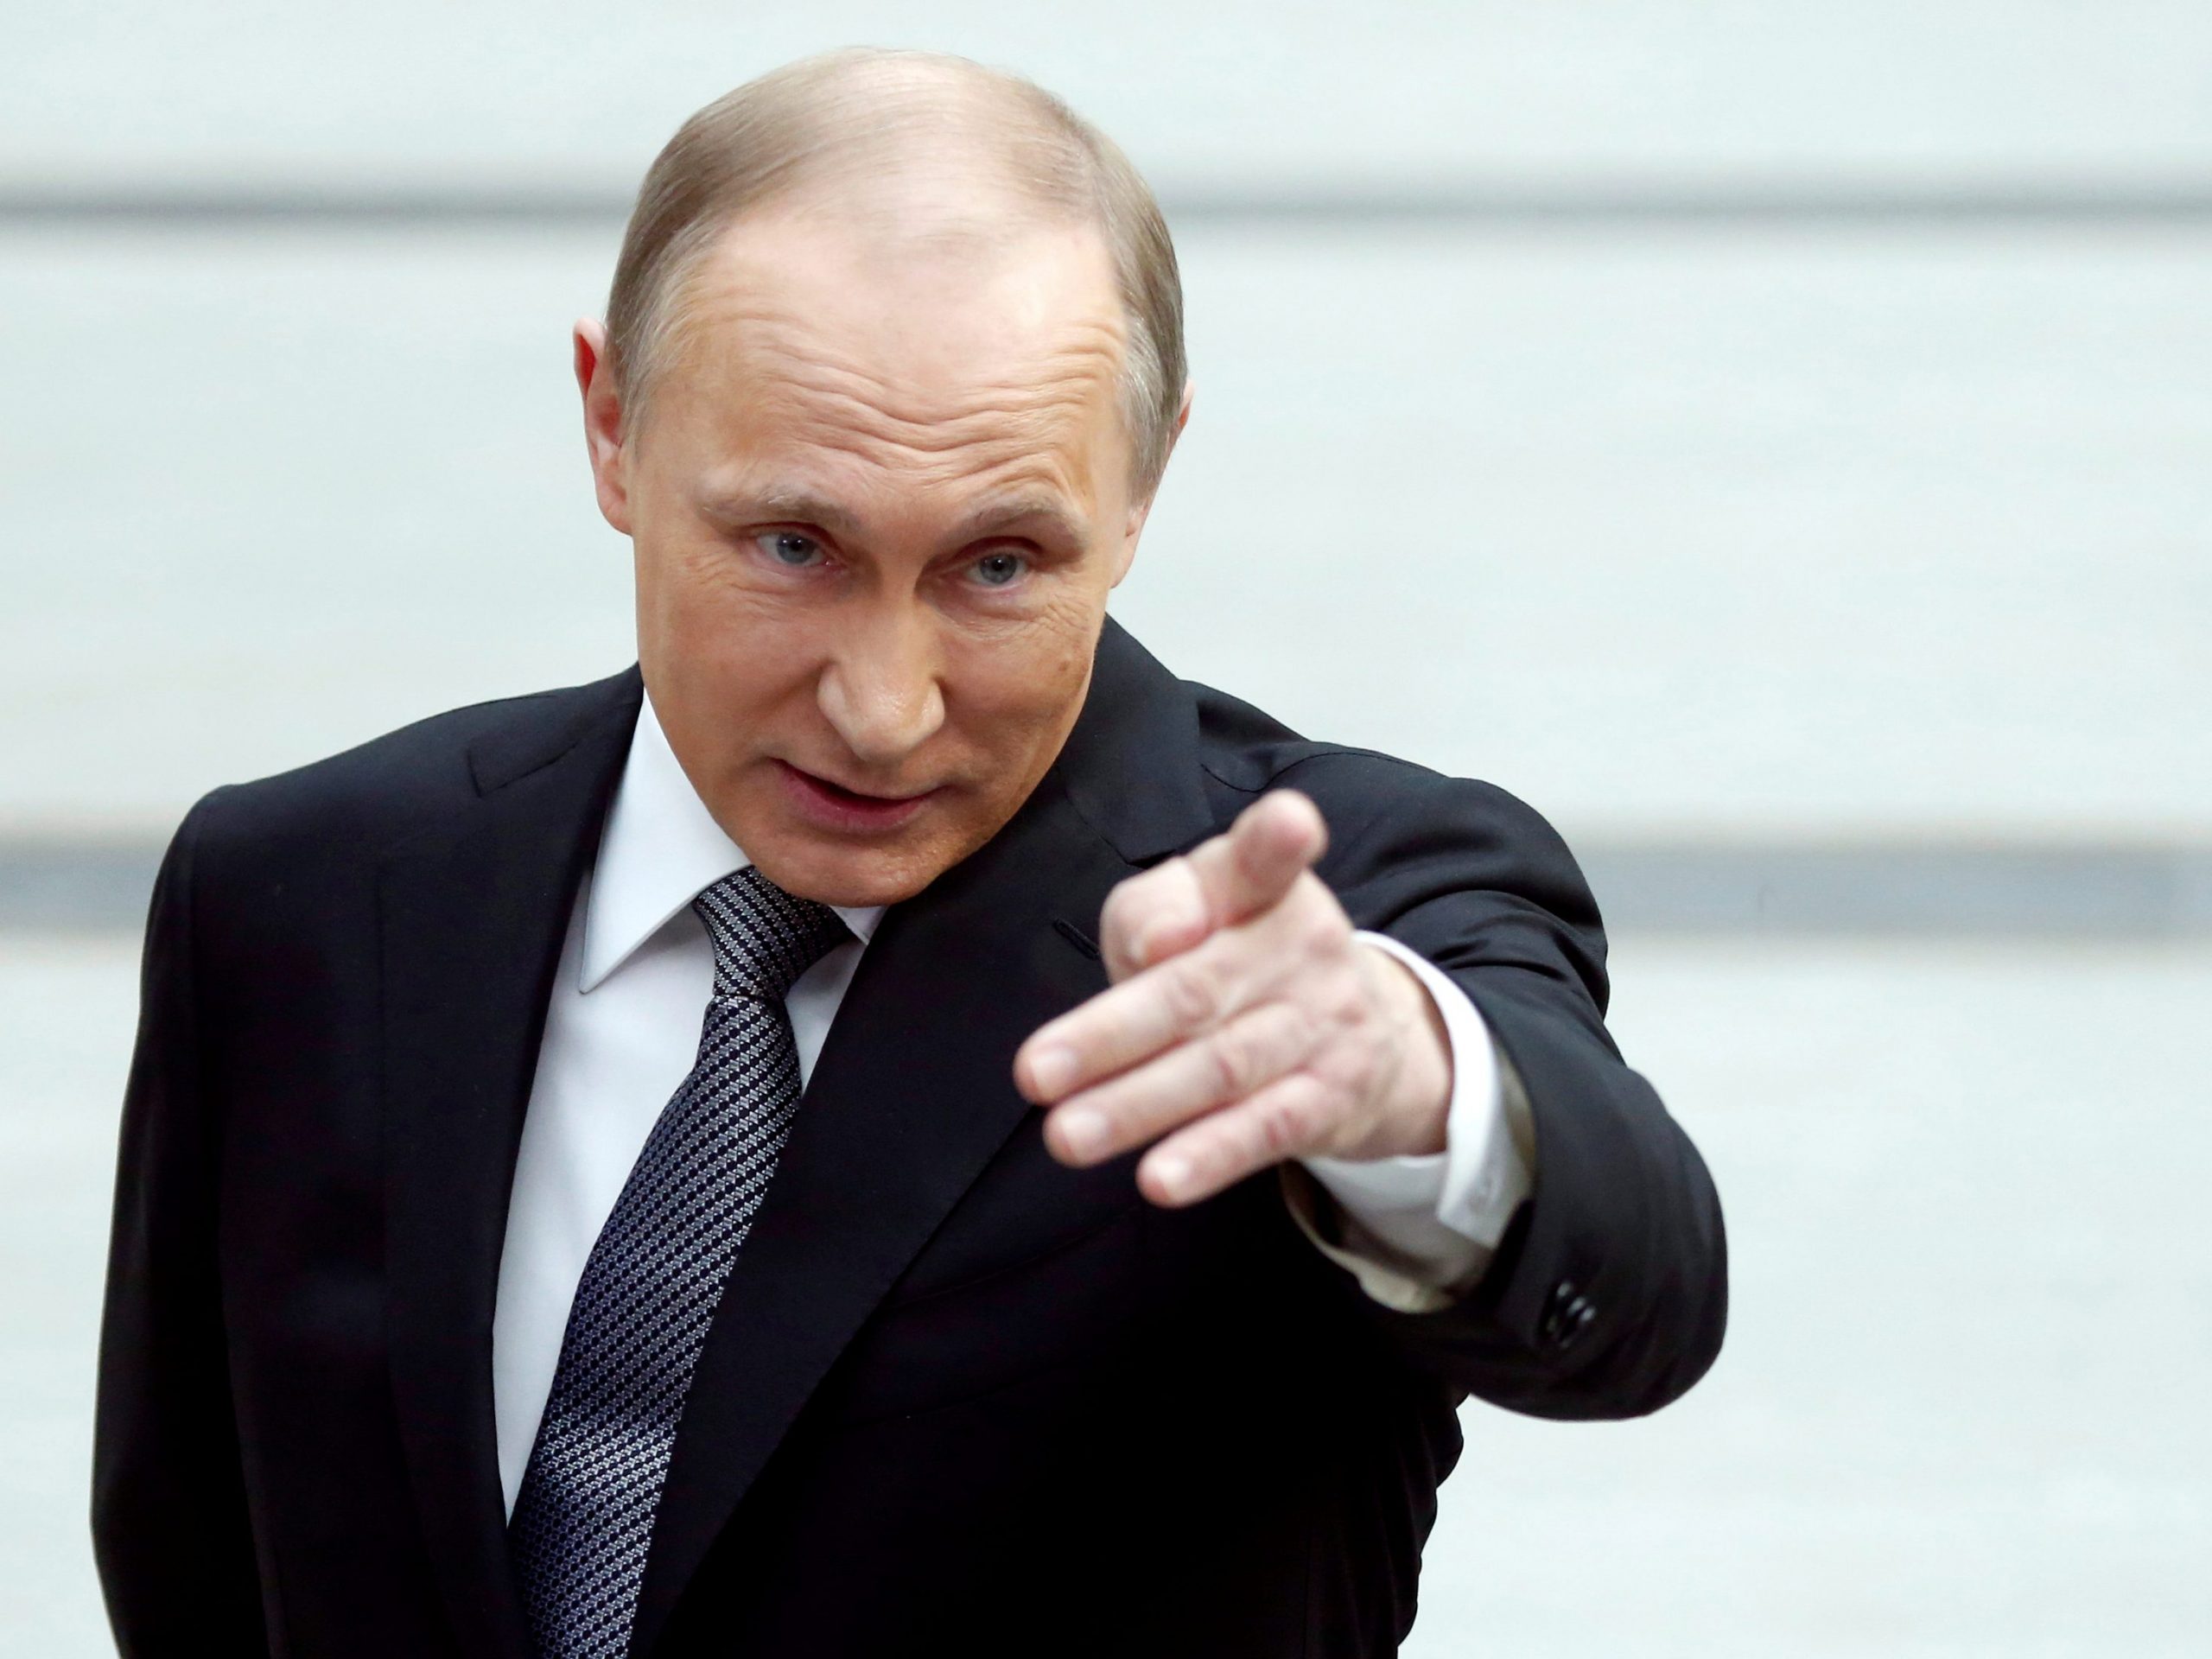 Putin apontando o dedo